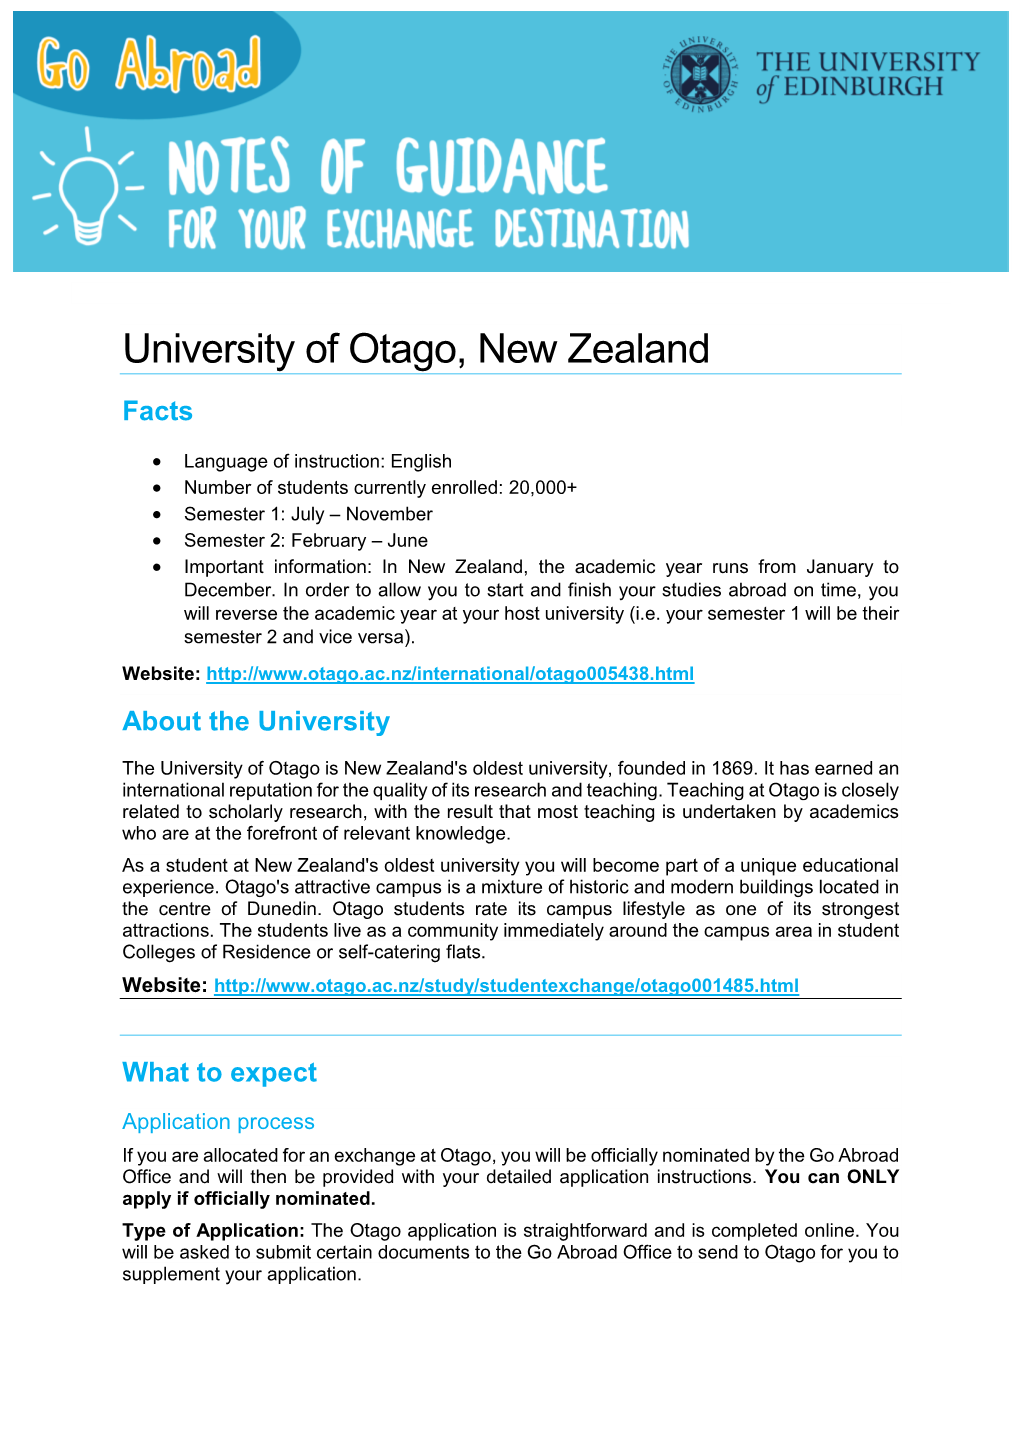 University of Otago, New Zealand Facts